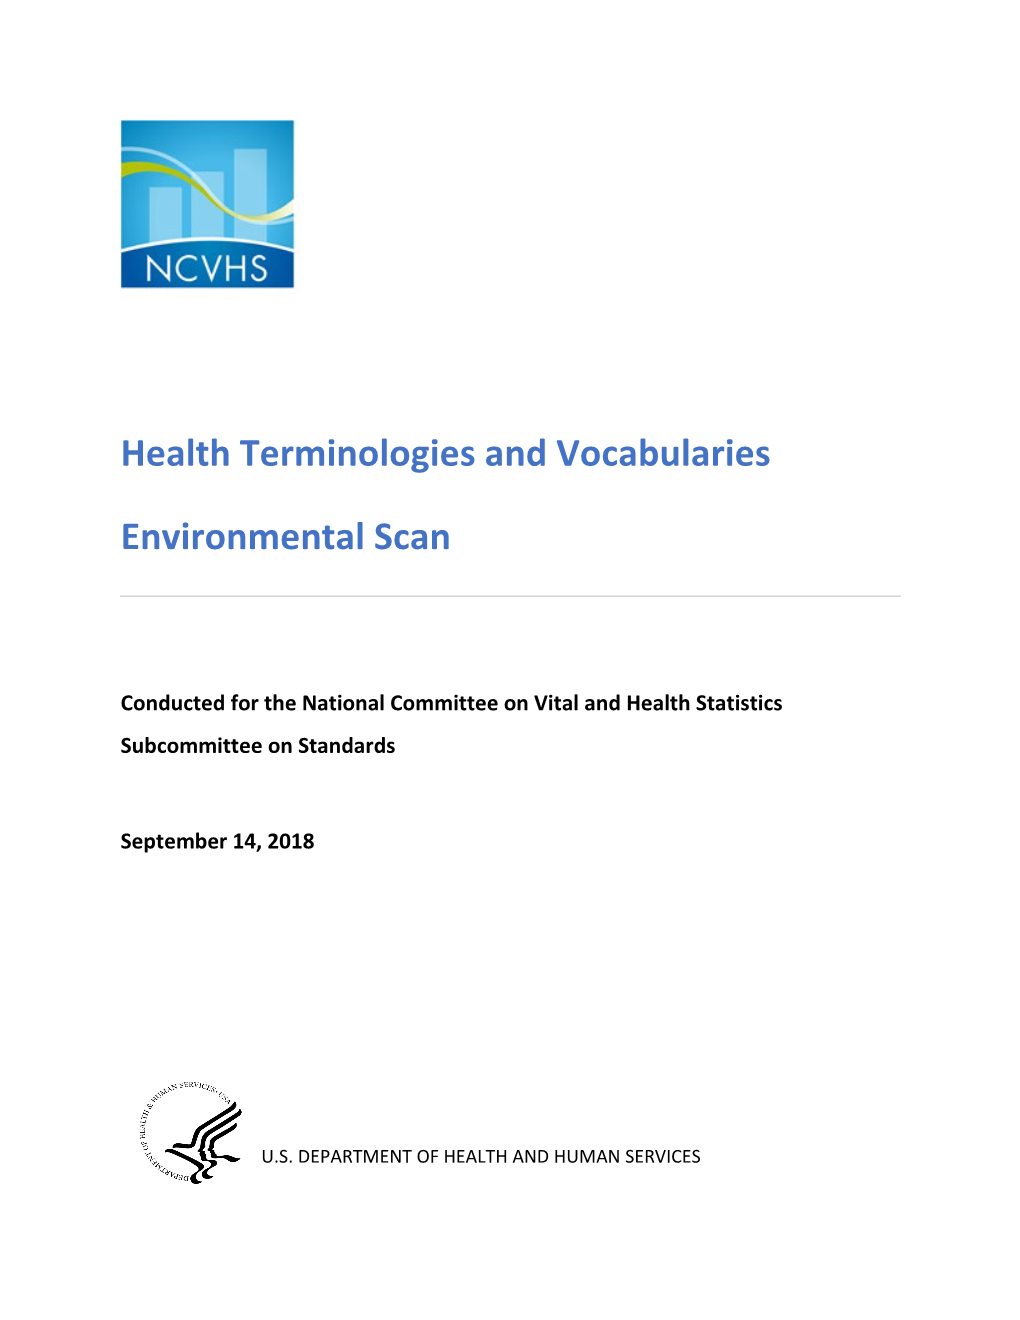 Report-Health Terminologies and Vocabularies Environmental Scan